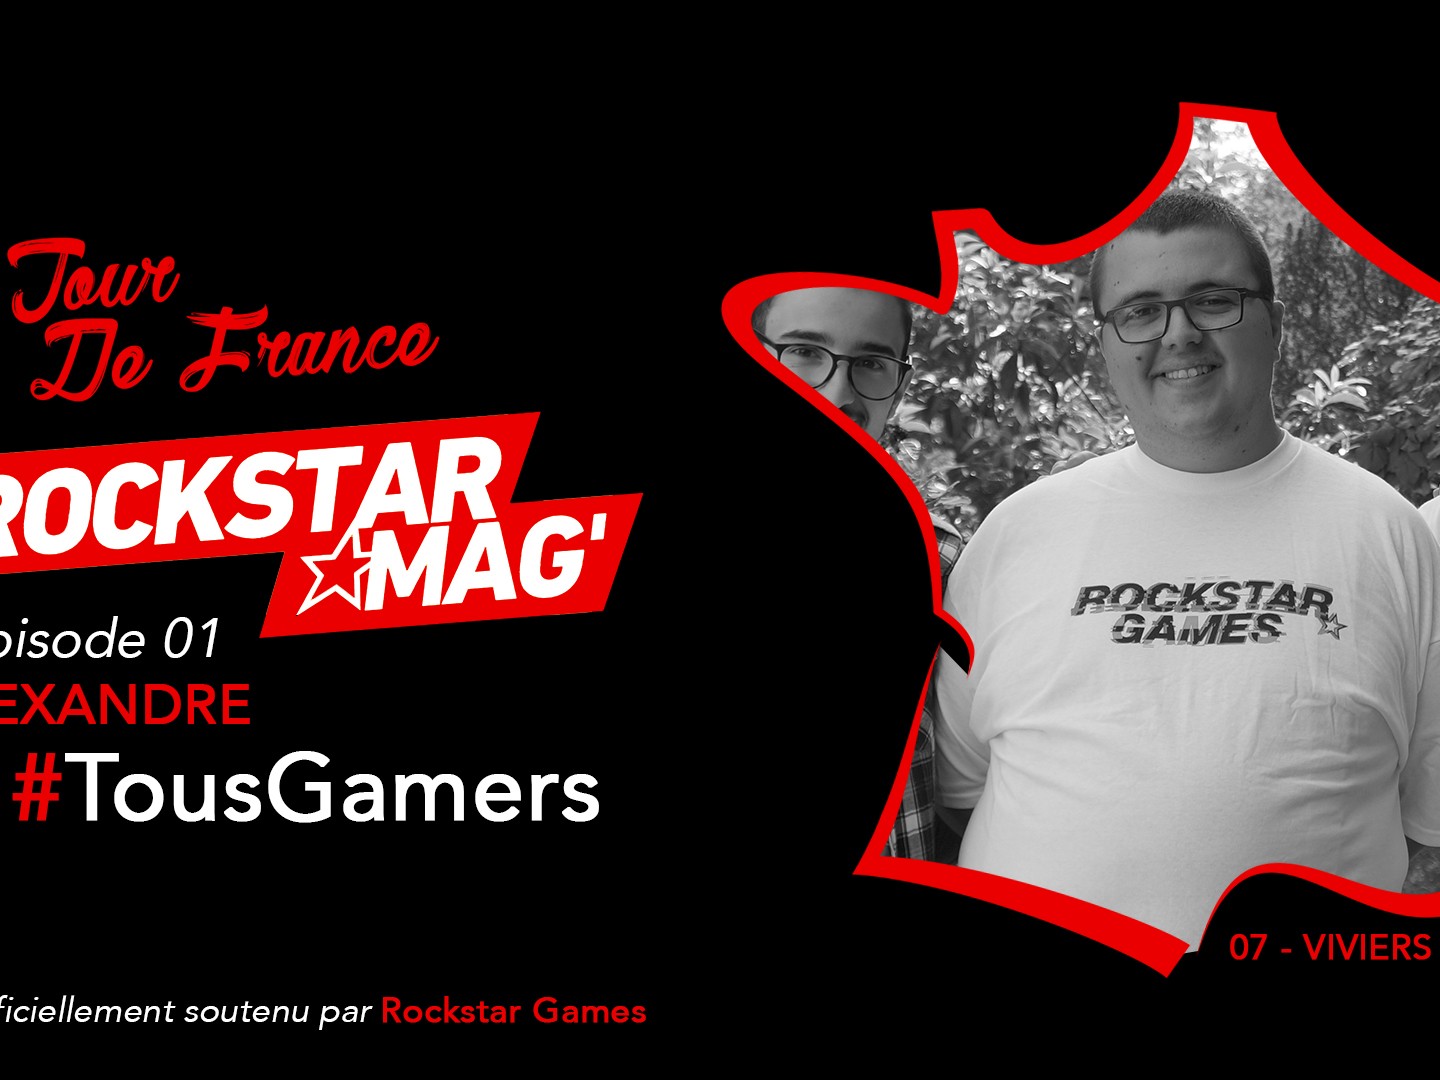 Tour de France TousGamers Rockstar Mag Episode 01 - Alexandre